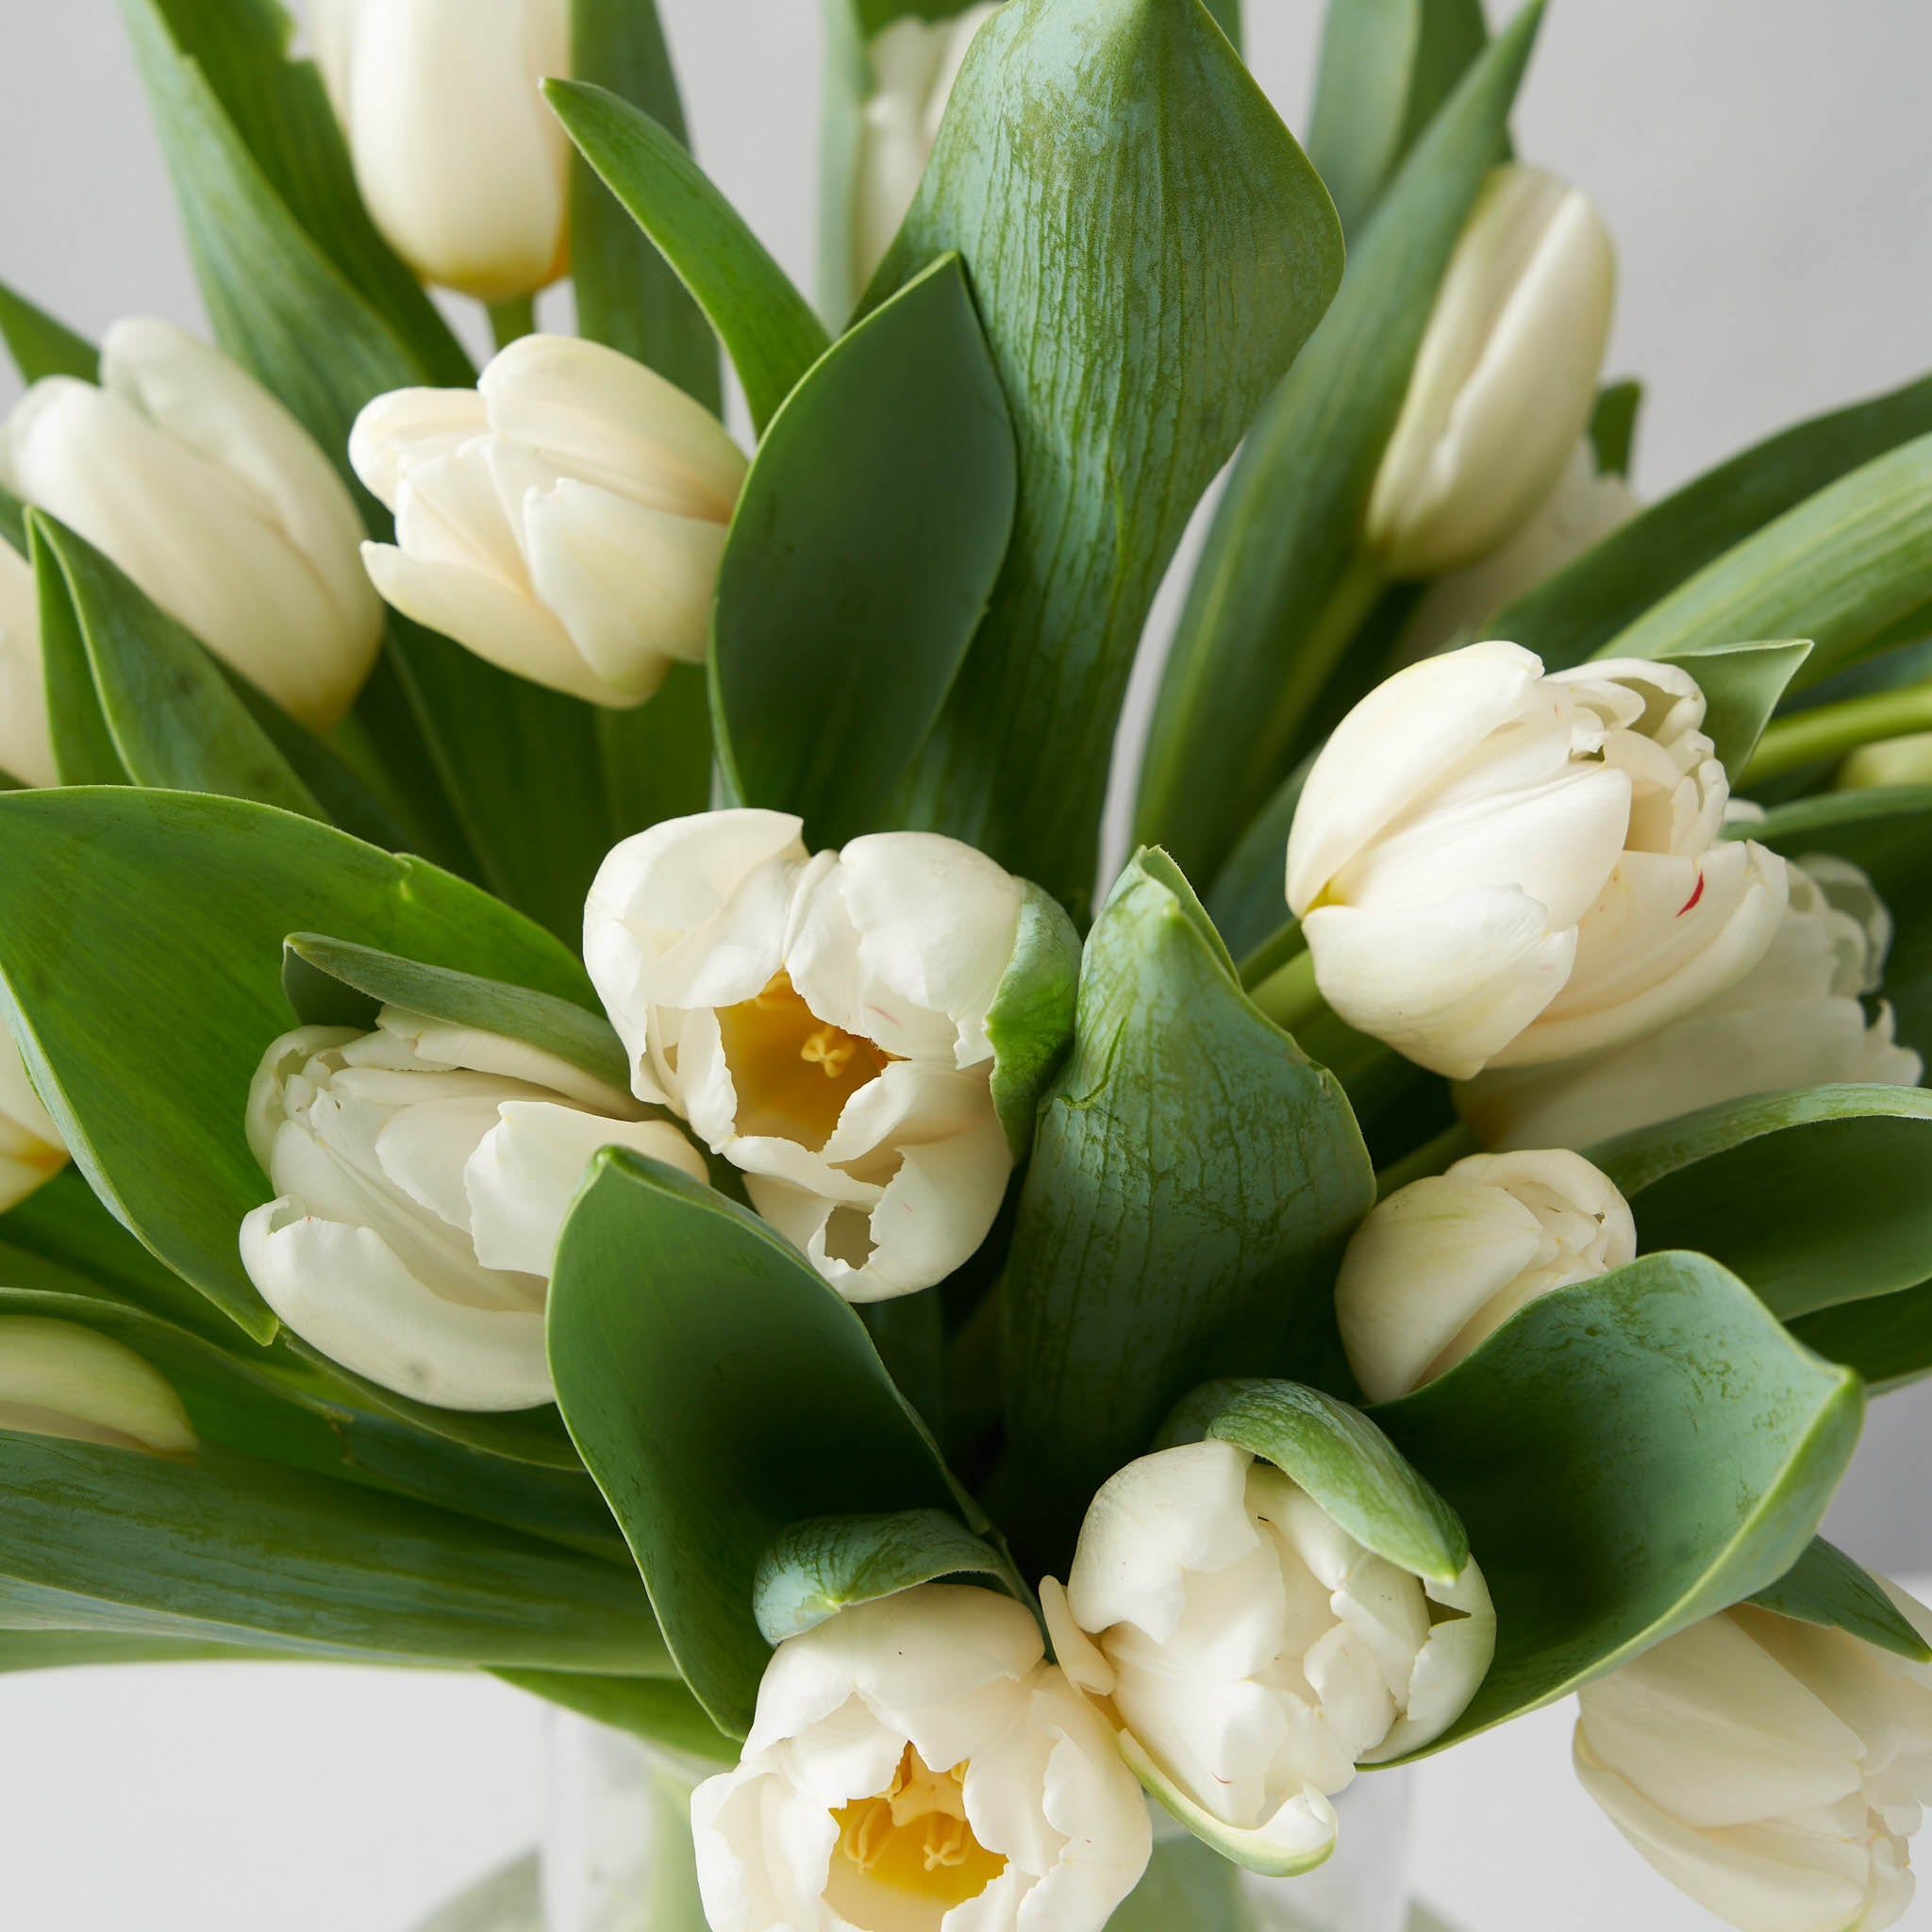 Willa (Arranged White Tulips)